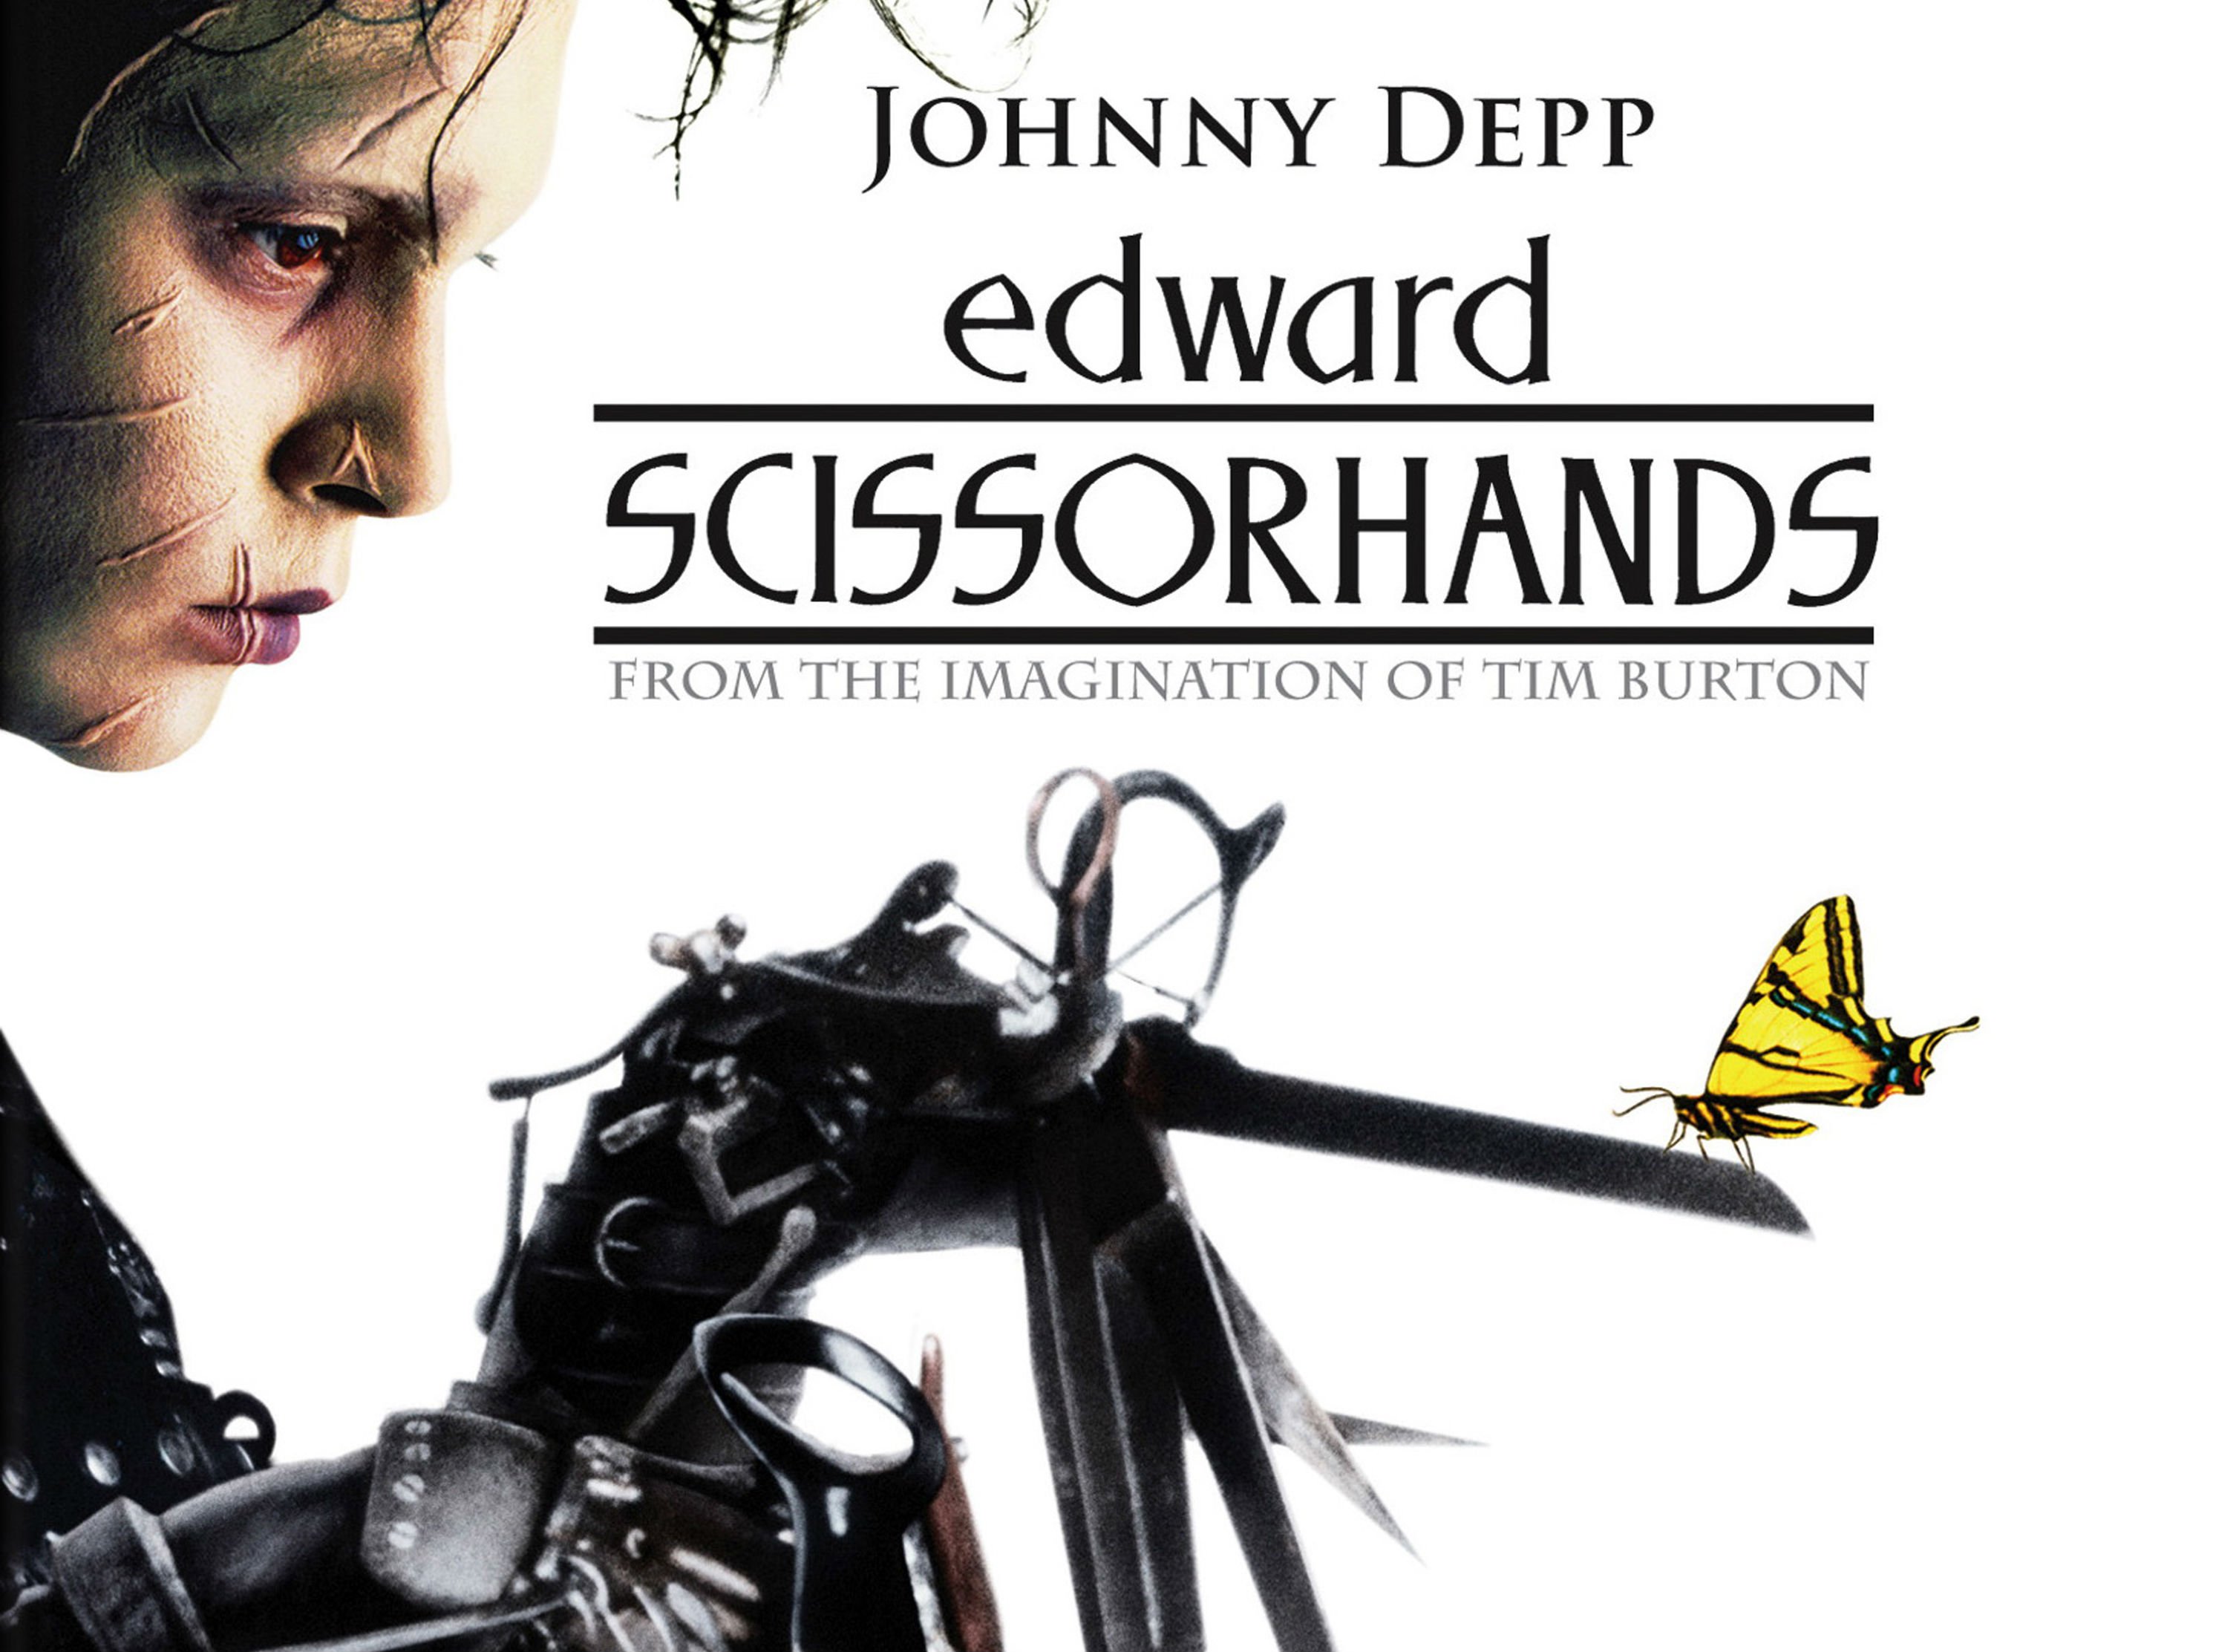 edward scissorhands wallpaper,font,vehicle,album cover,photography,movie